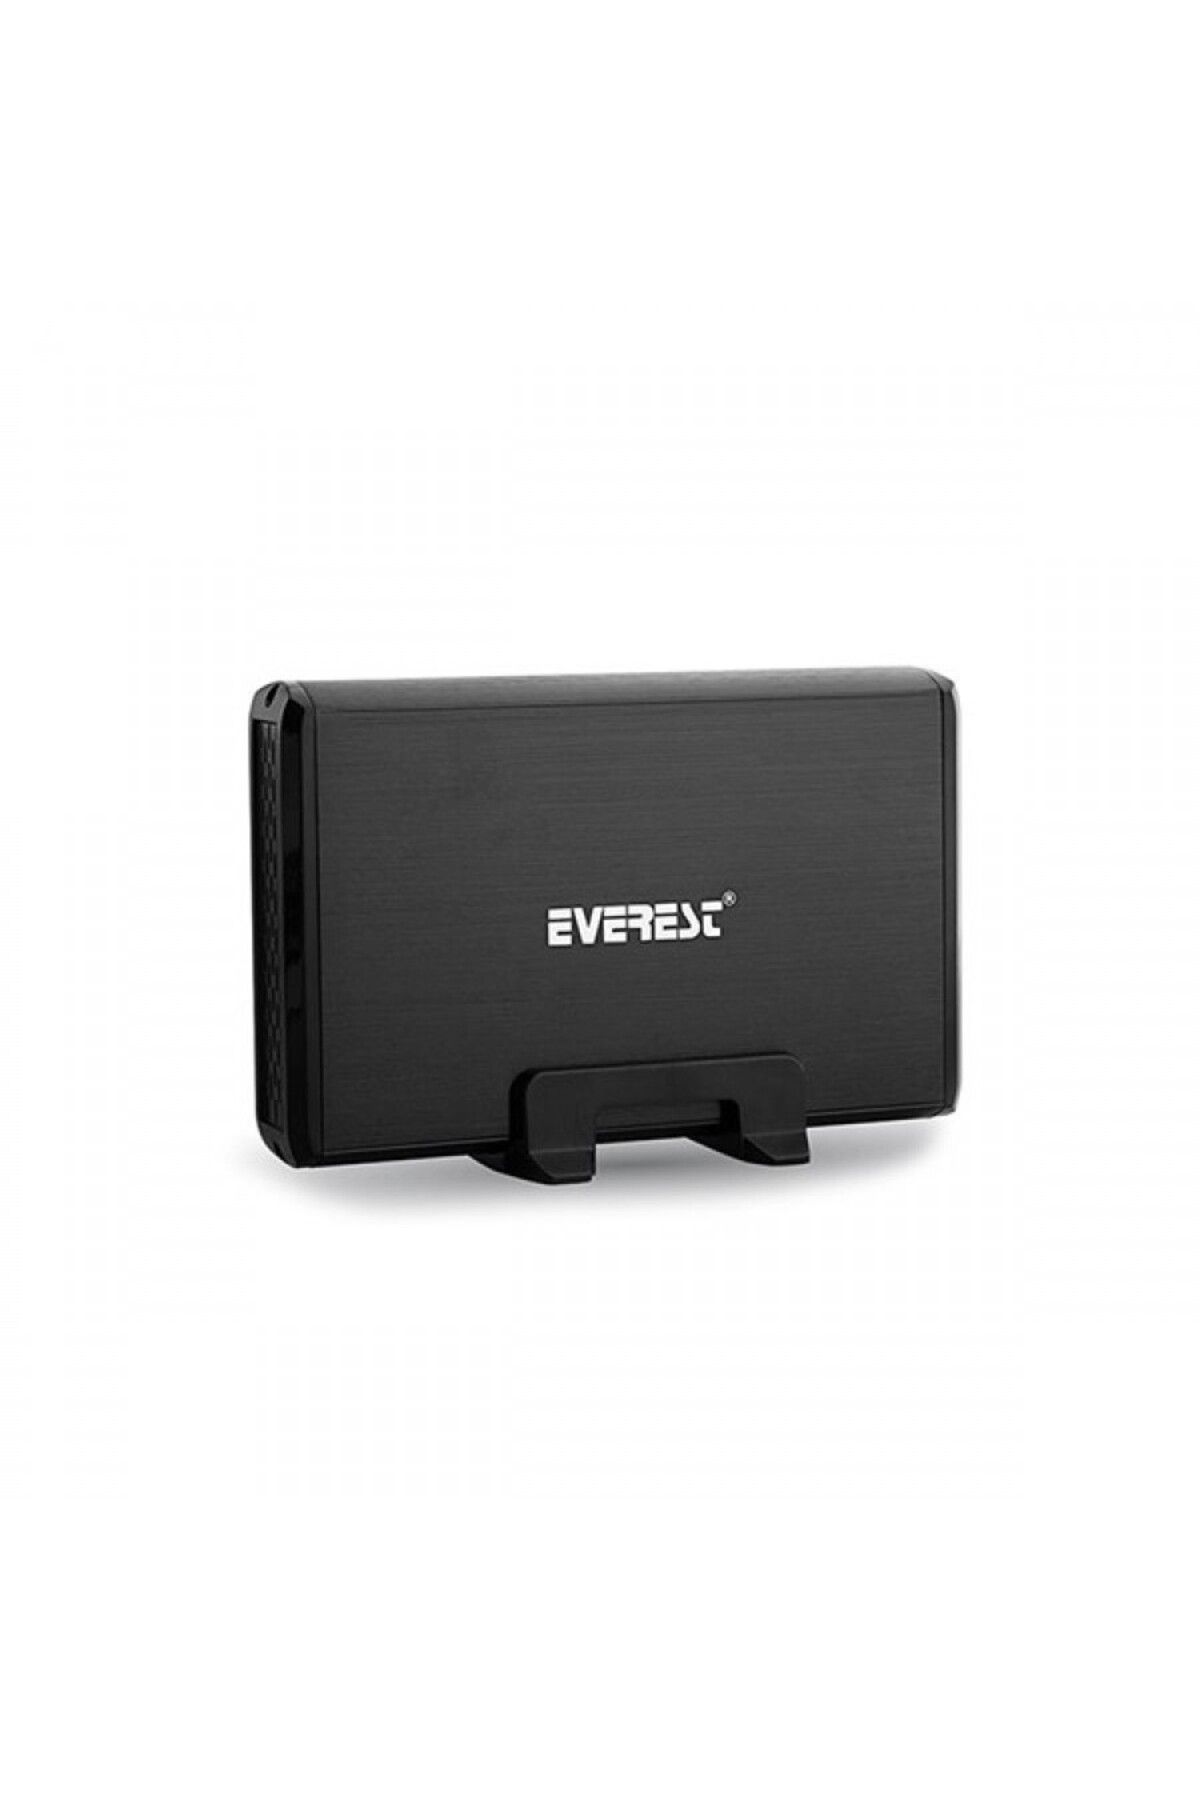 Everest 3,5" USB 3.0 HD3-354 Sata Alüminyum Harddisk Kutusu Siyah